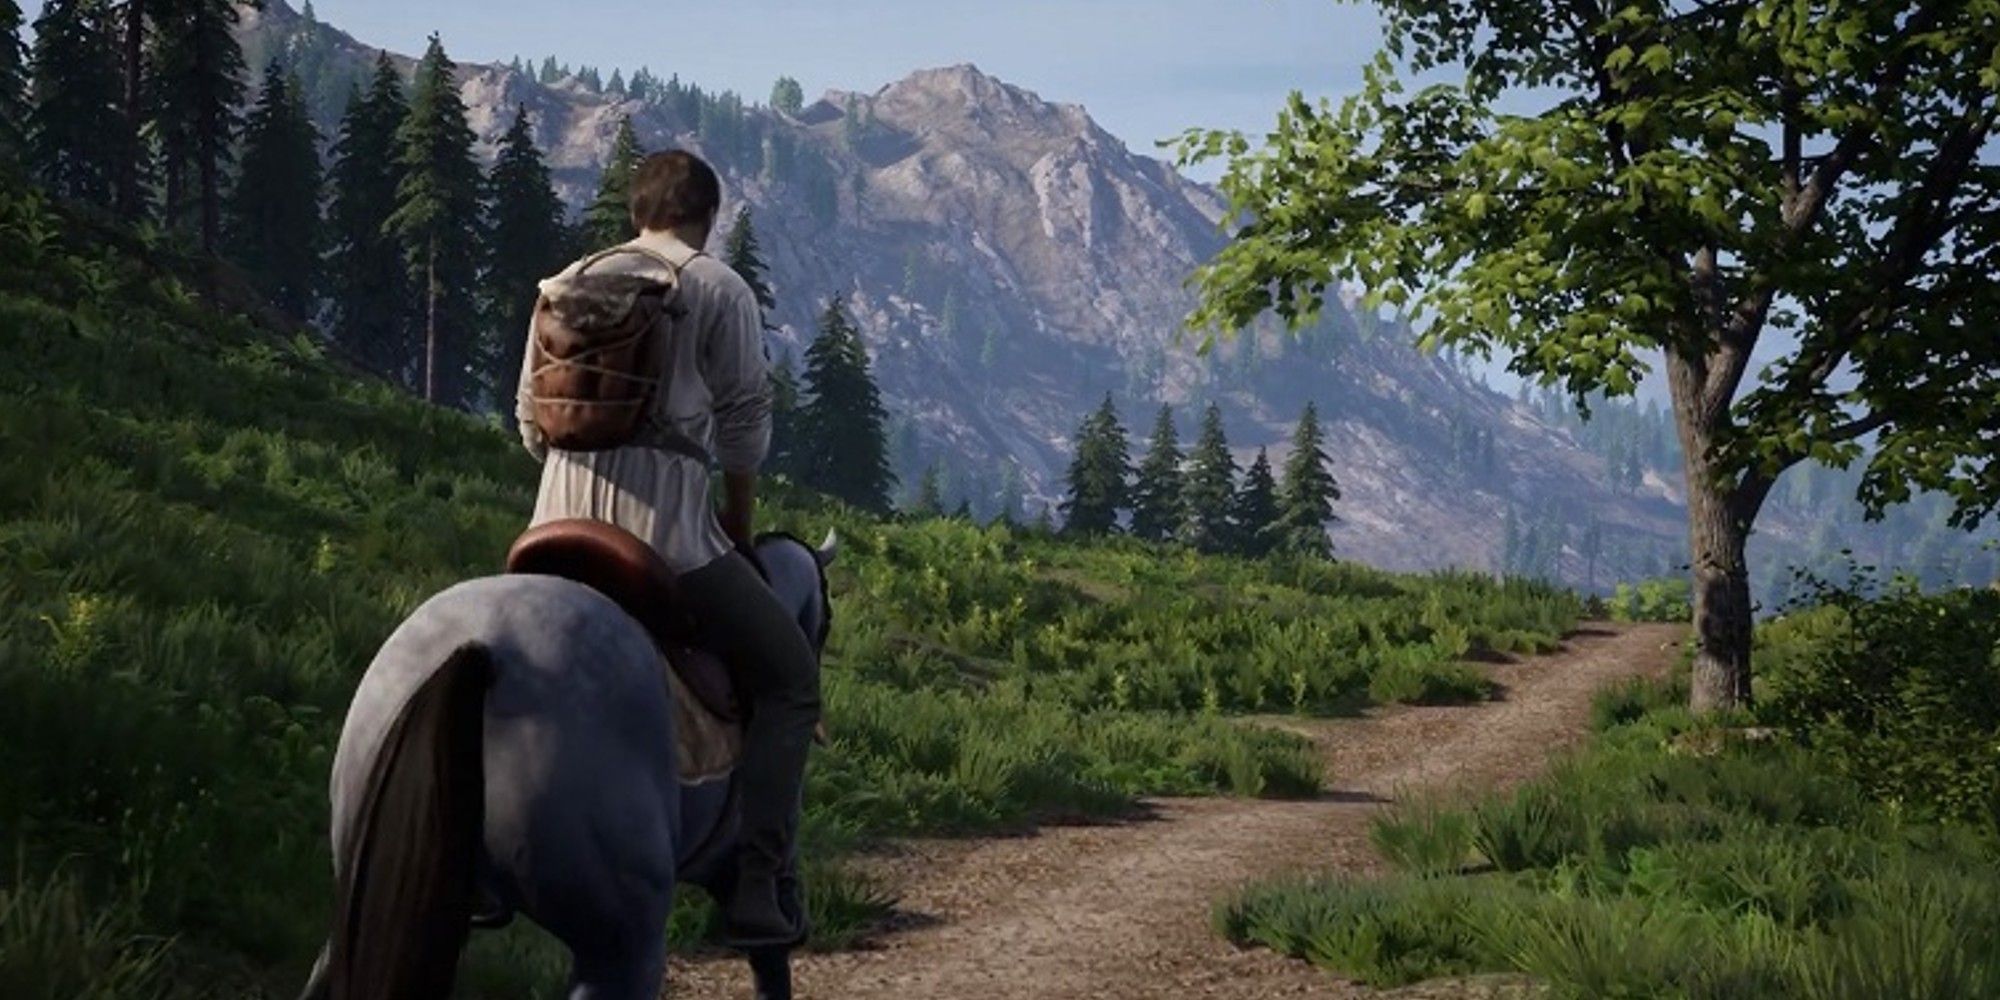 player riding a horse